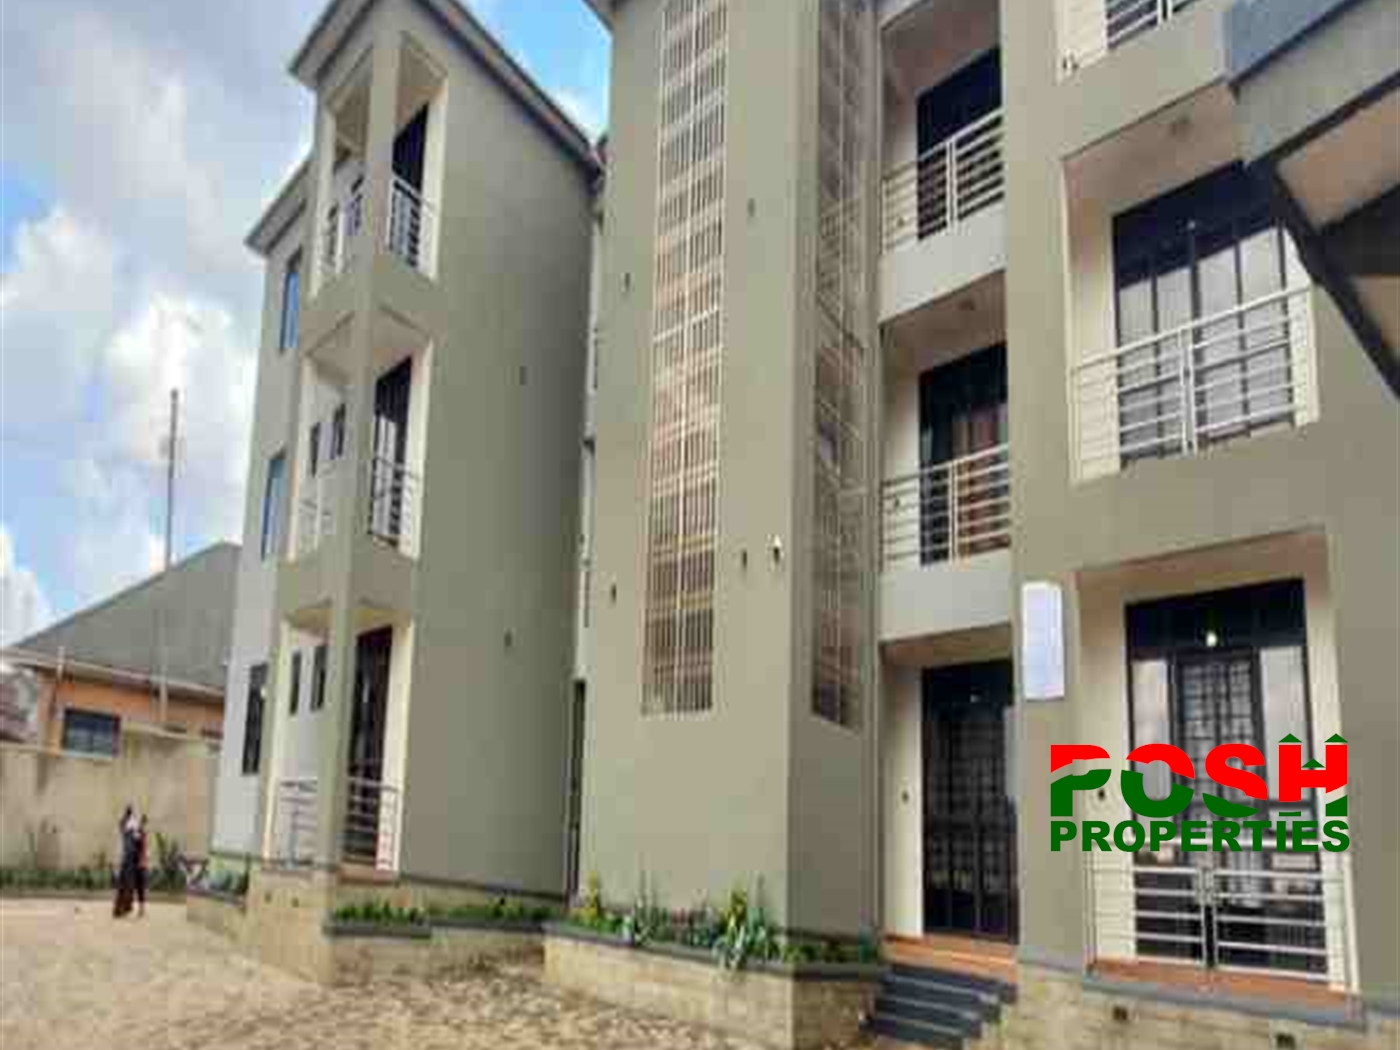 Apartment block for sale in Mengo Kampala